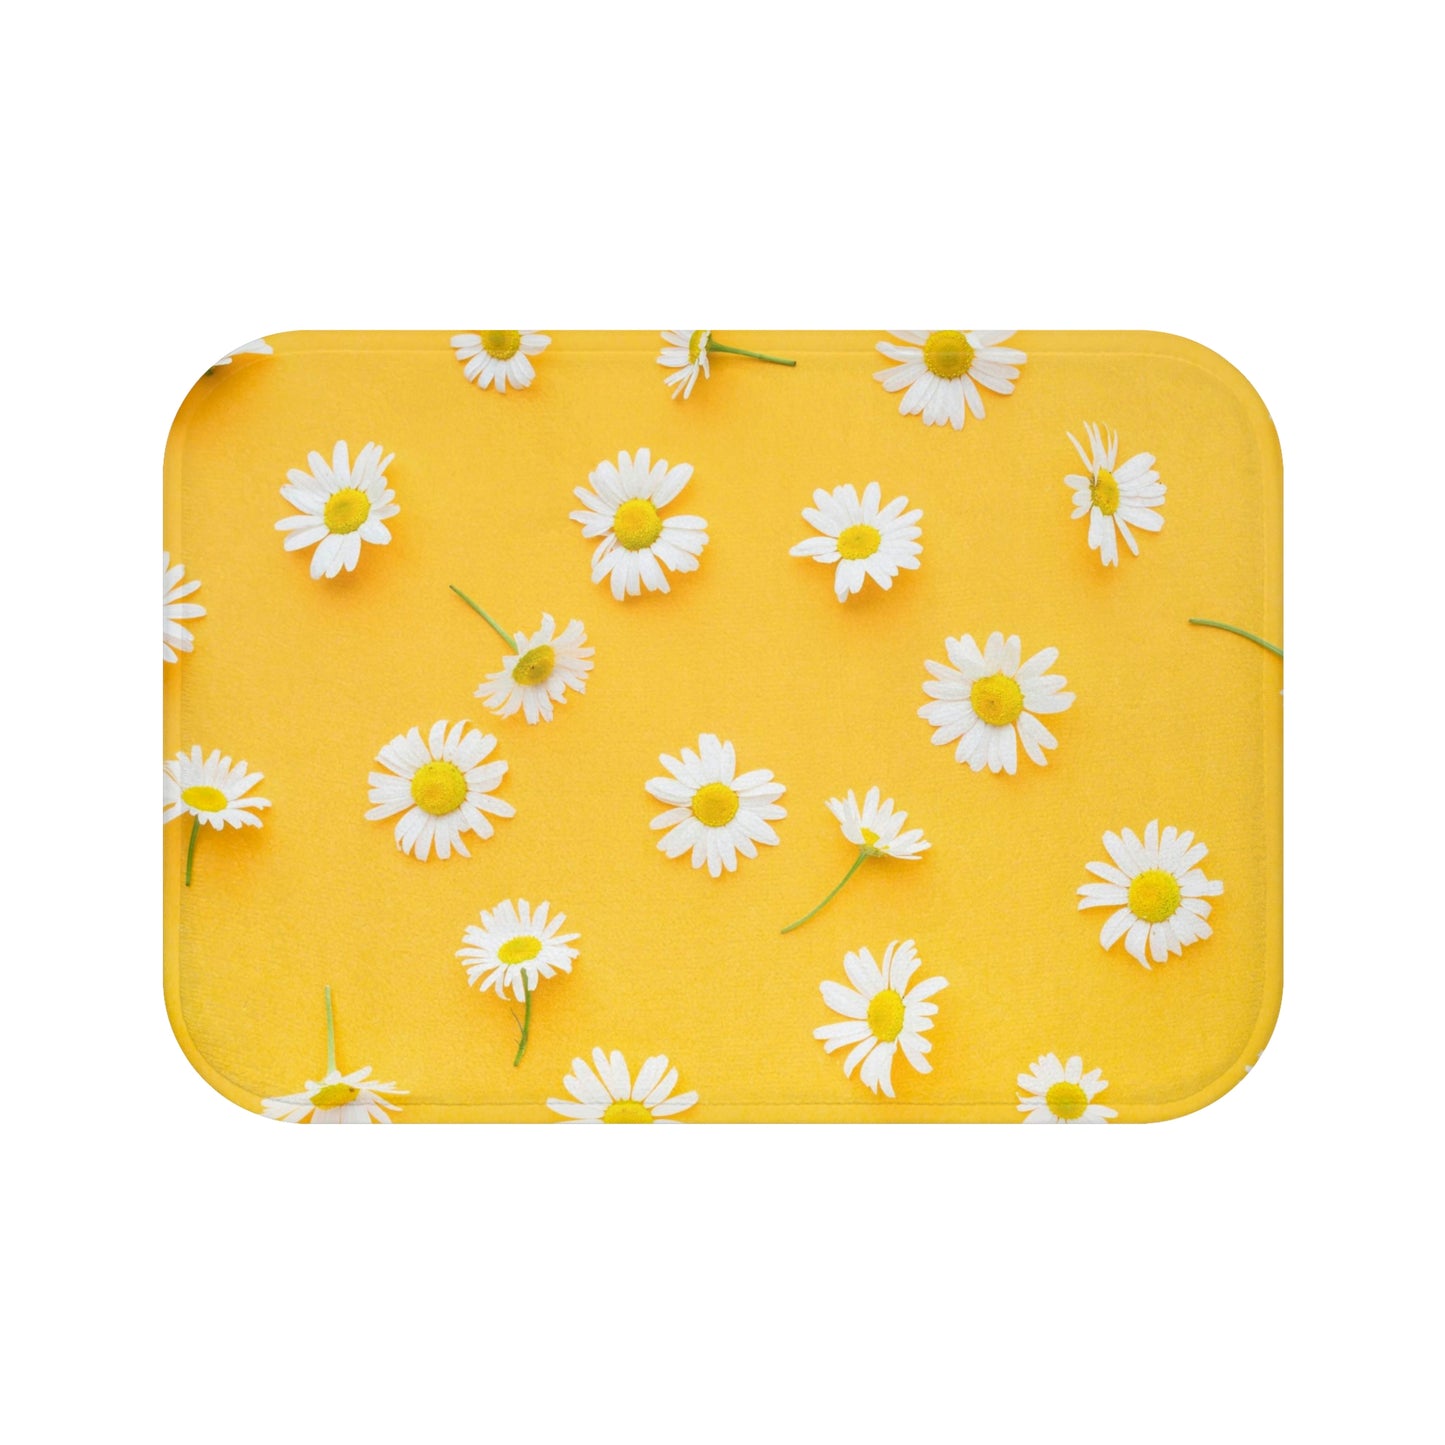 Wihte Flowers on Yellow Bath Mat